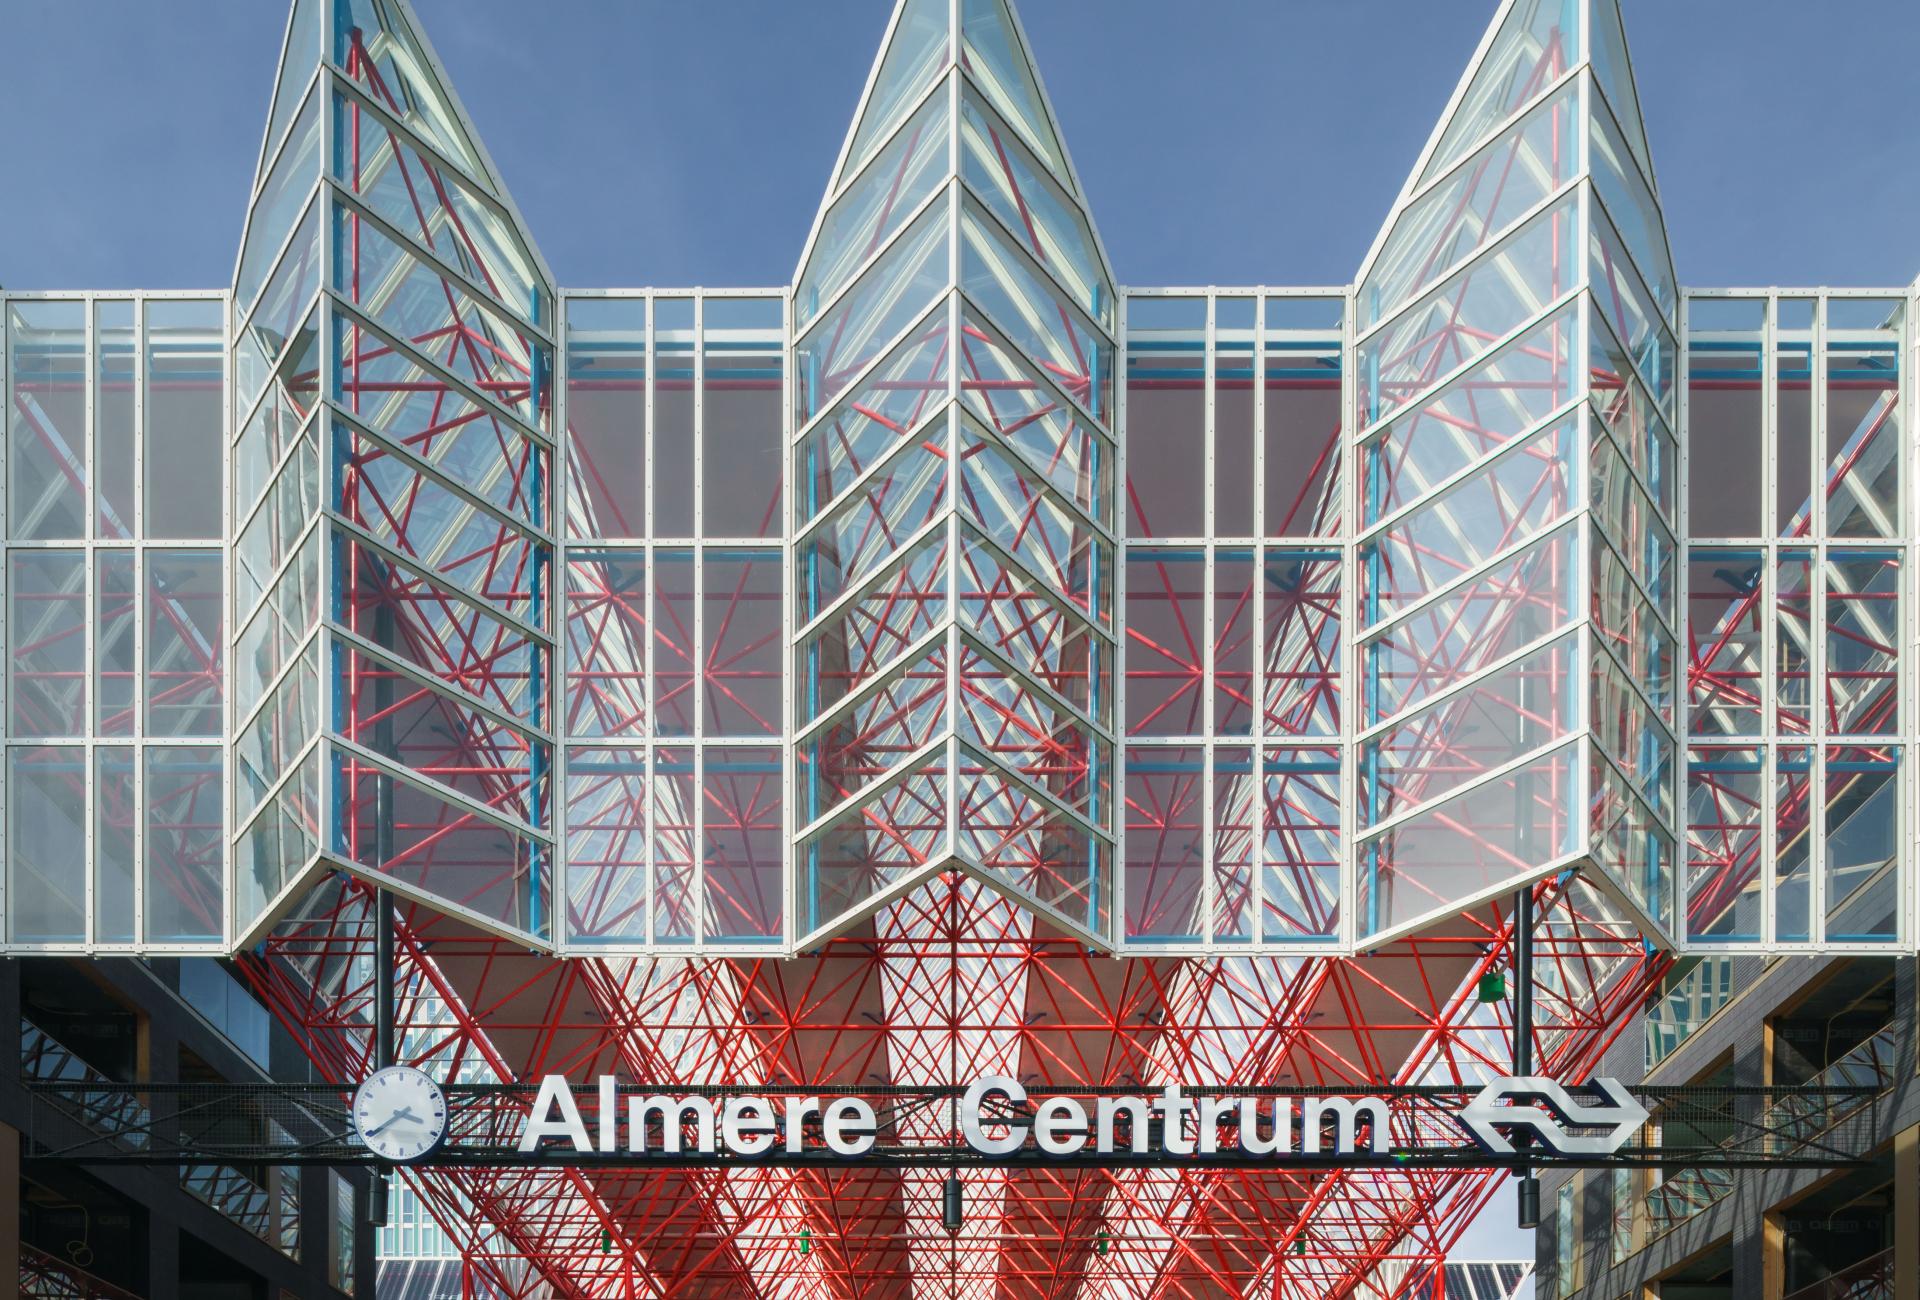 Station Almere centrum